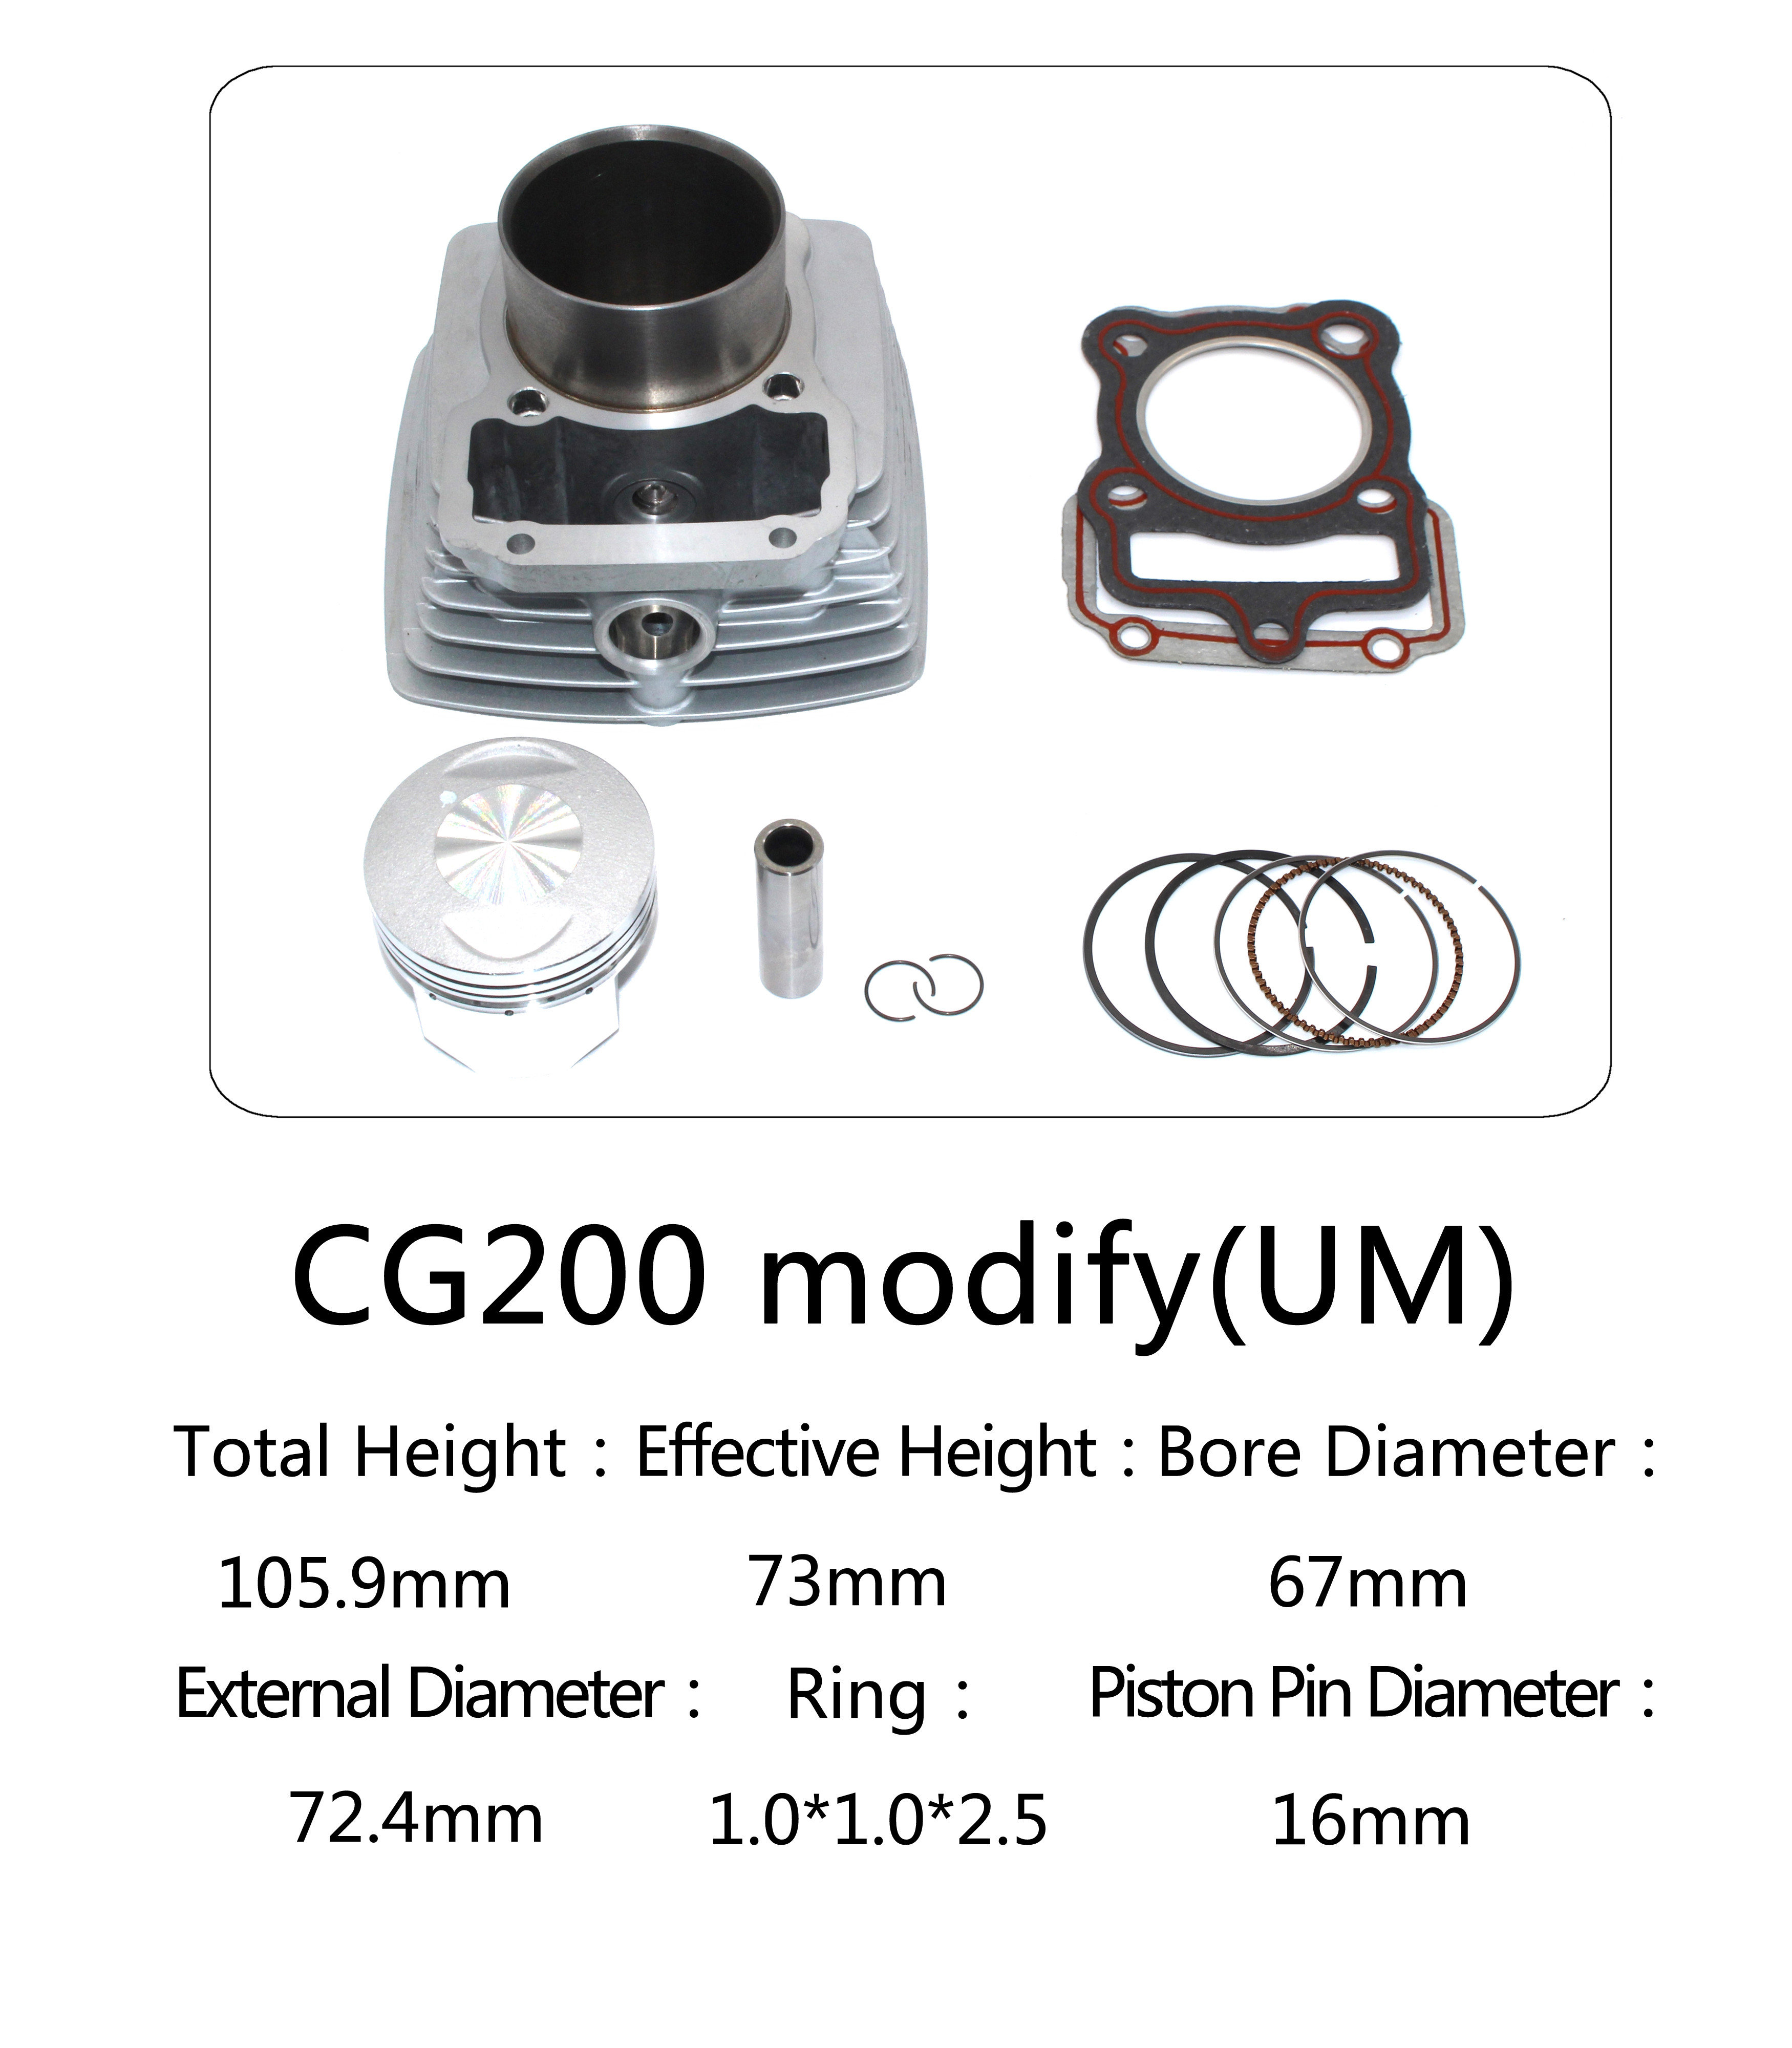 CG200 Modify Motorcycle Cylinder Kit , 200cc Displacement Big Bore Cylinder Kits